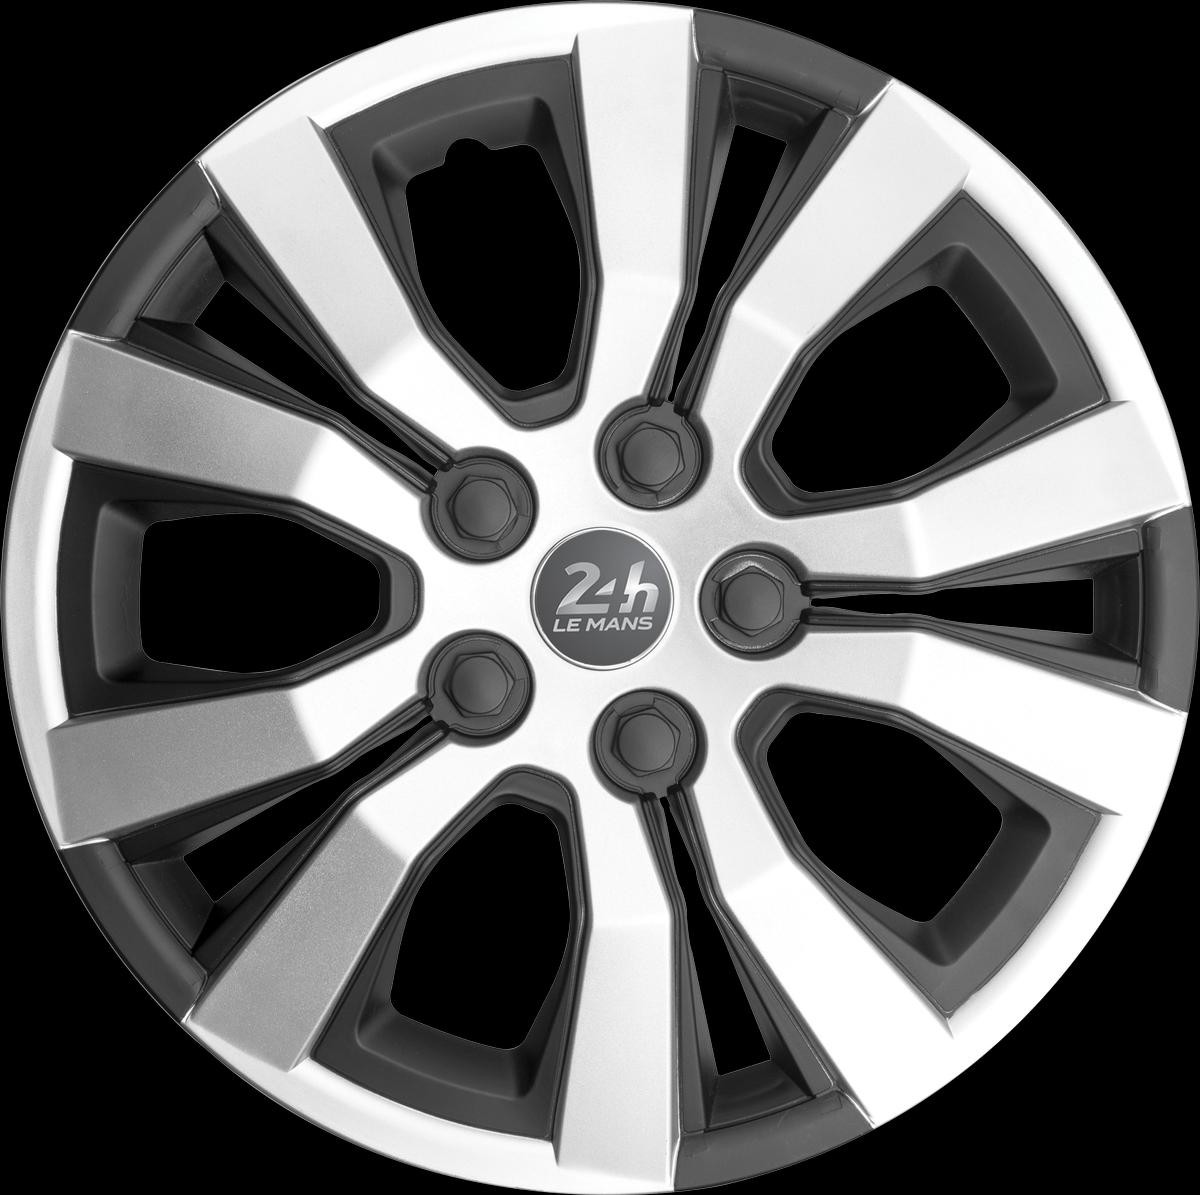 Wheel trims 24H LE MANS Mulsanne E13MUL.BBS